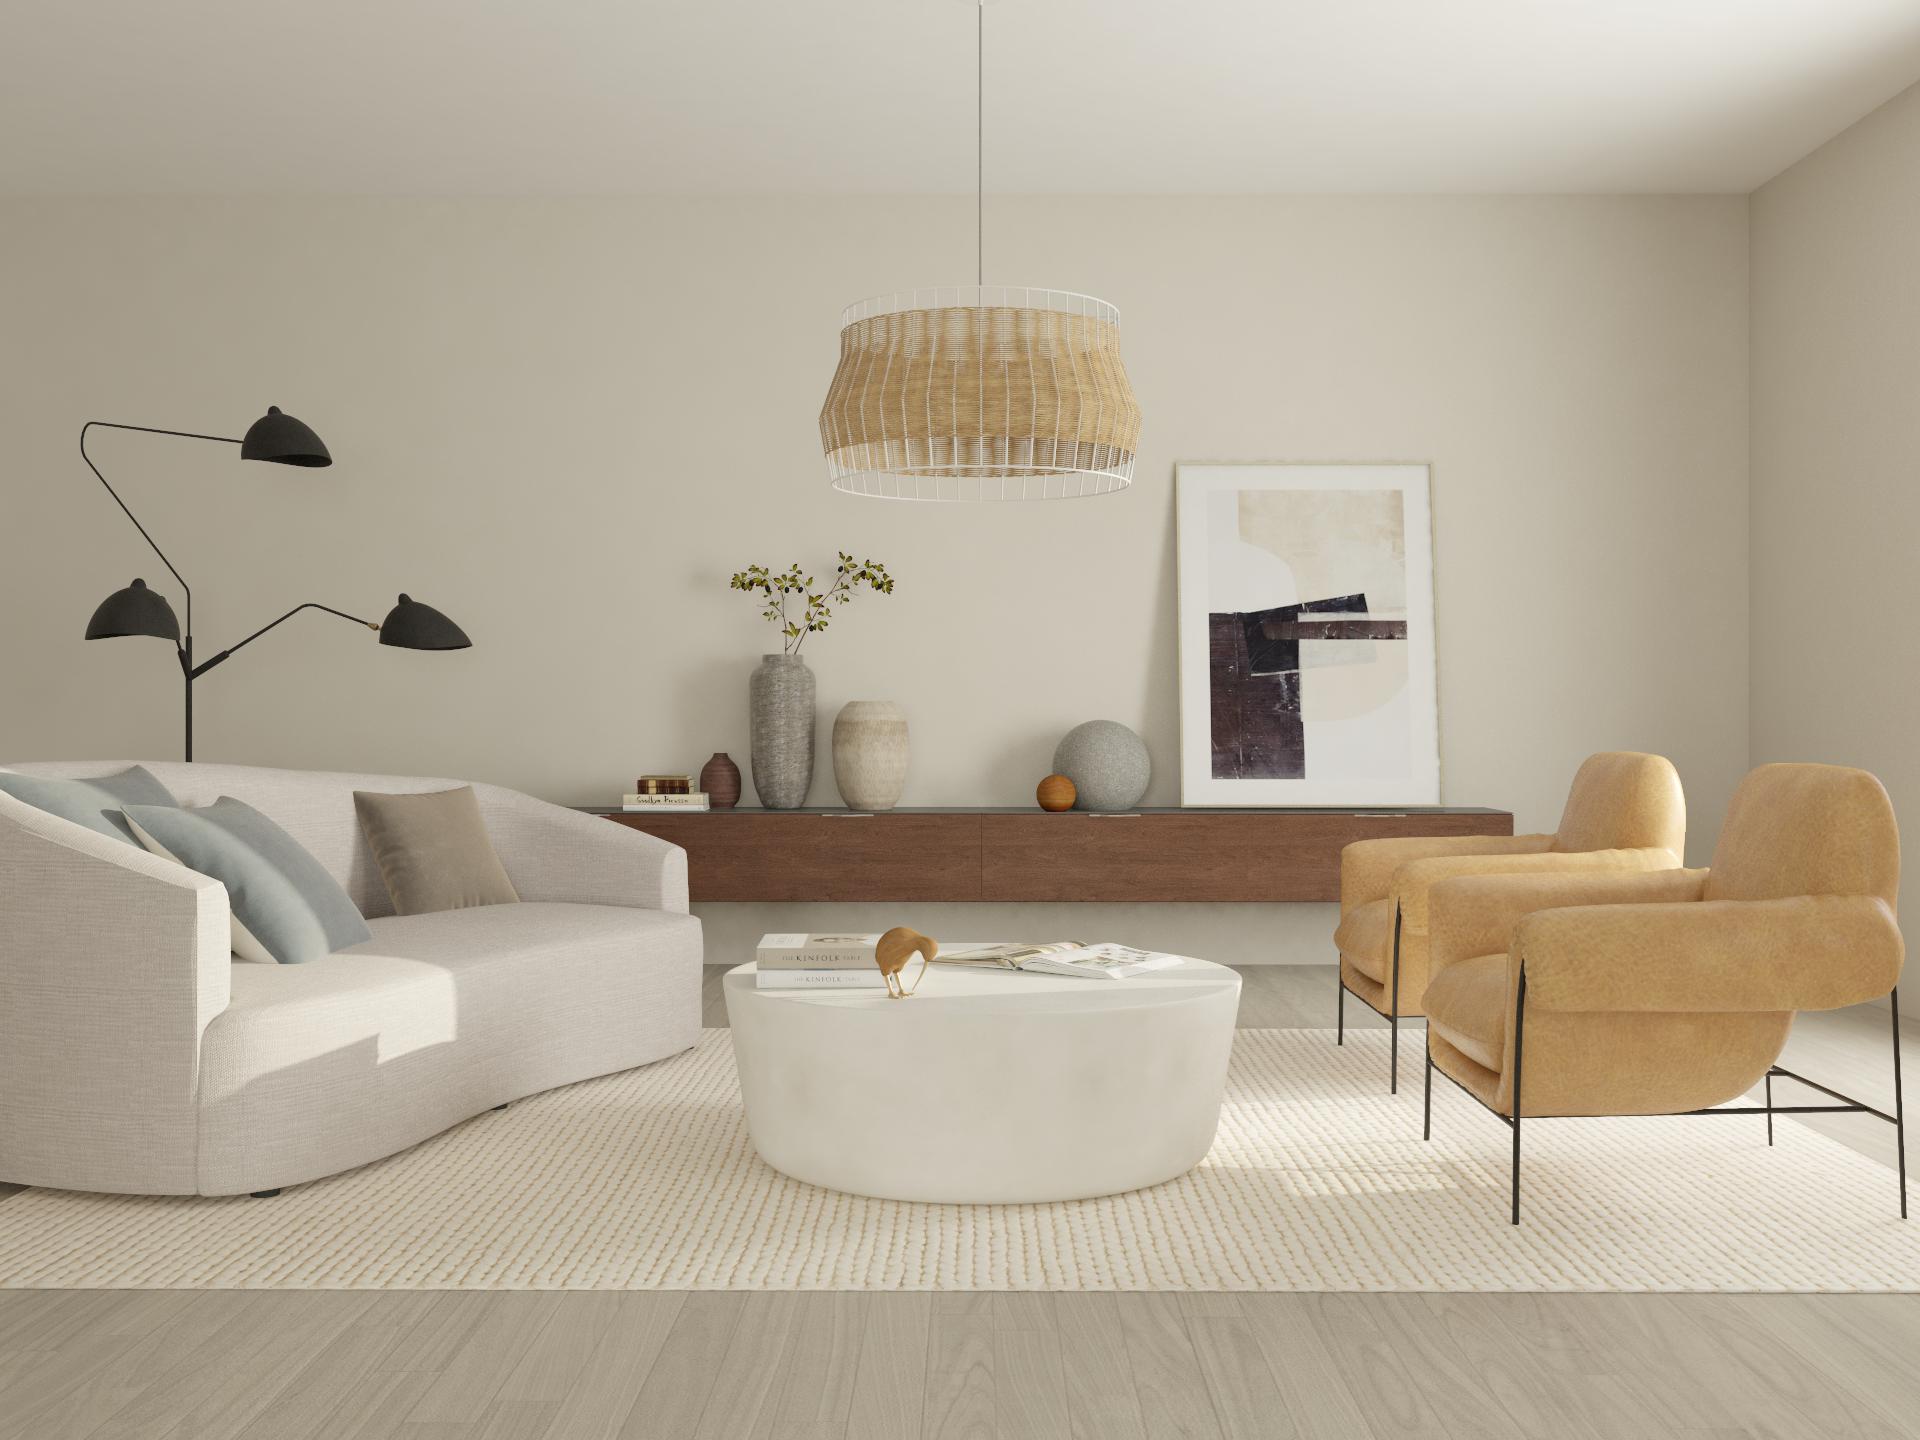 Minimalist style off-white living room